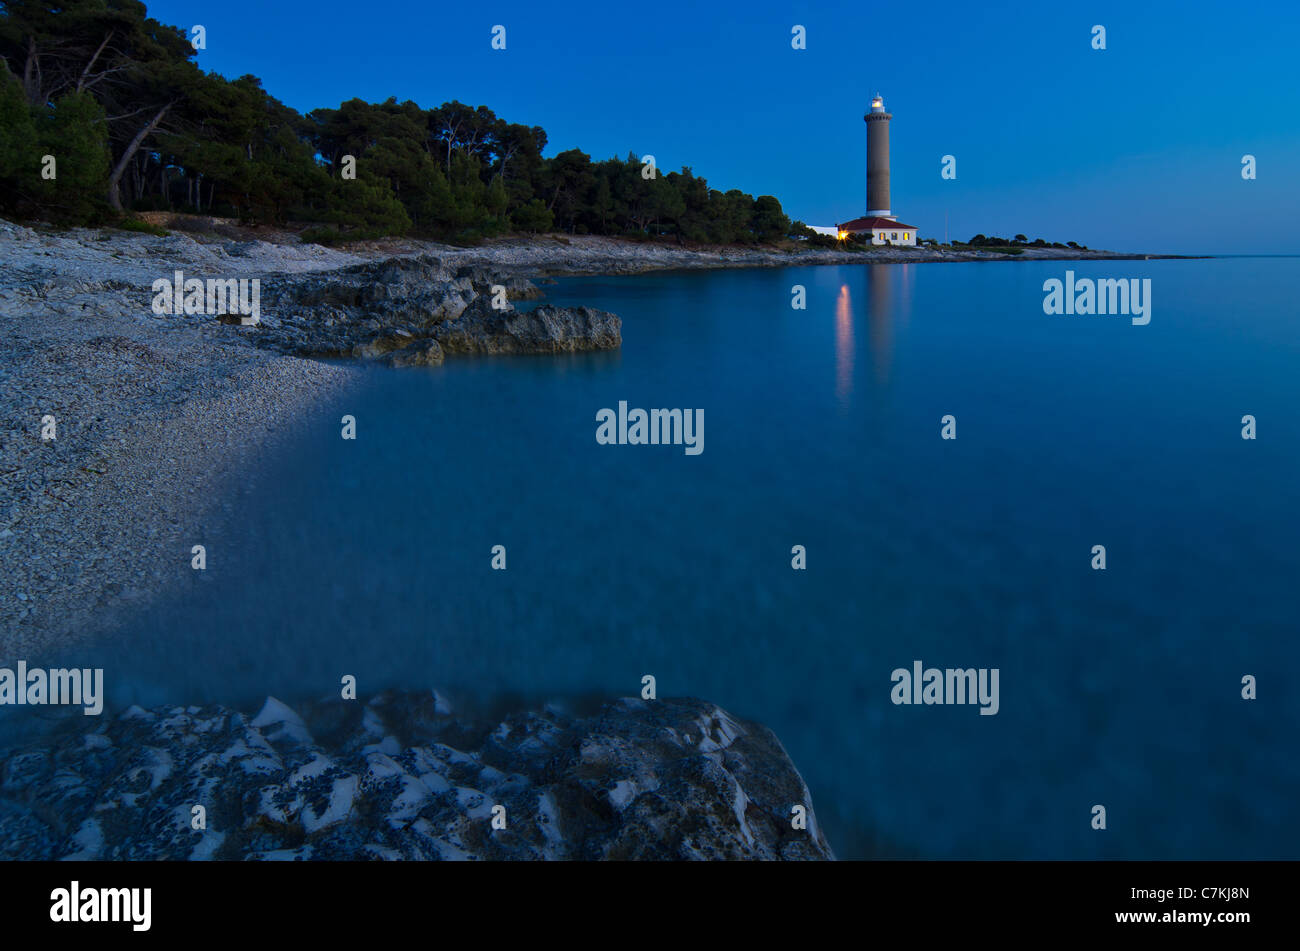 Adriatic sea, island Dugi otok, Croatia. The 'wild side' of the island.  With a view of lighthouse Veli rat. Stock Photo